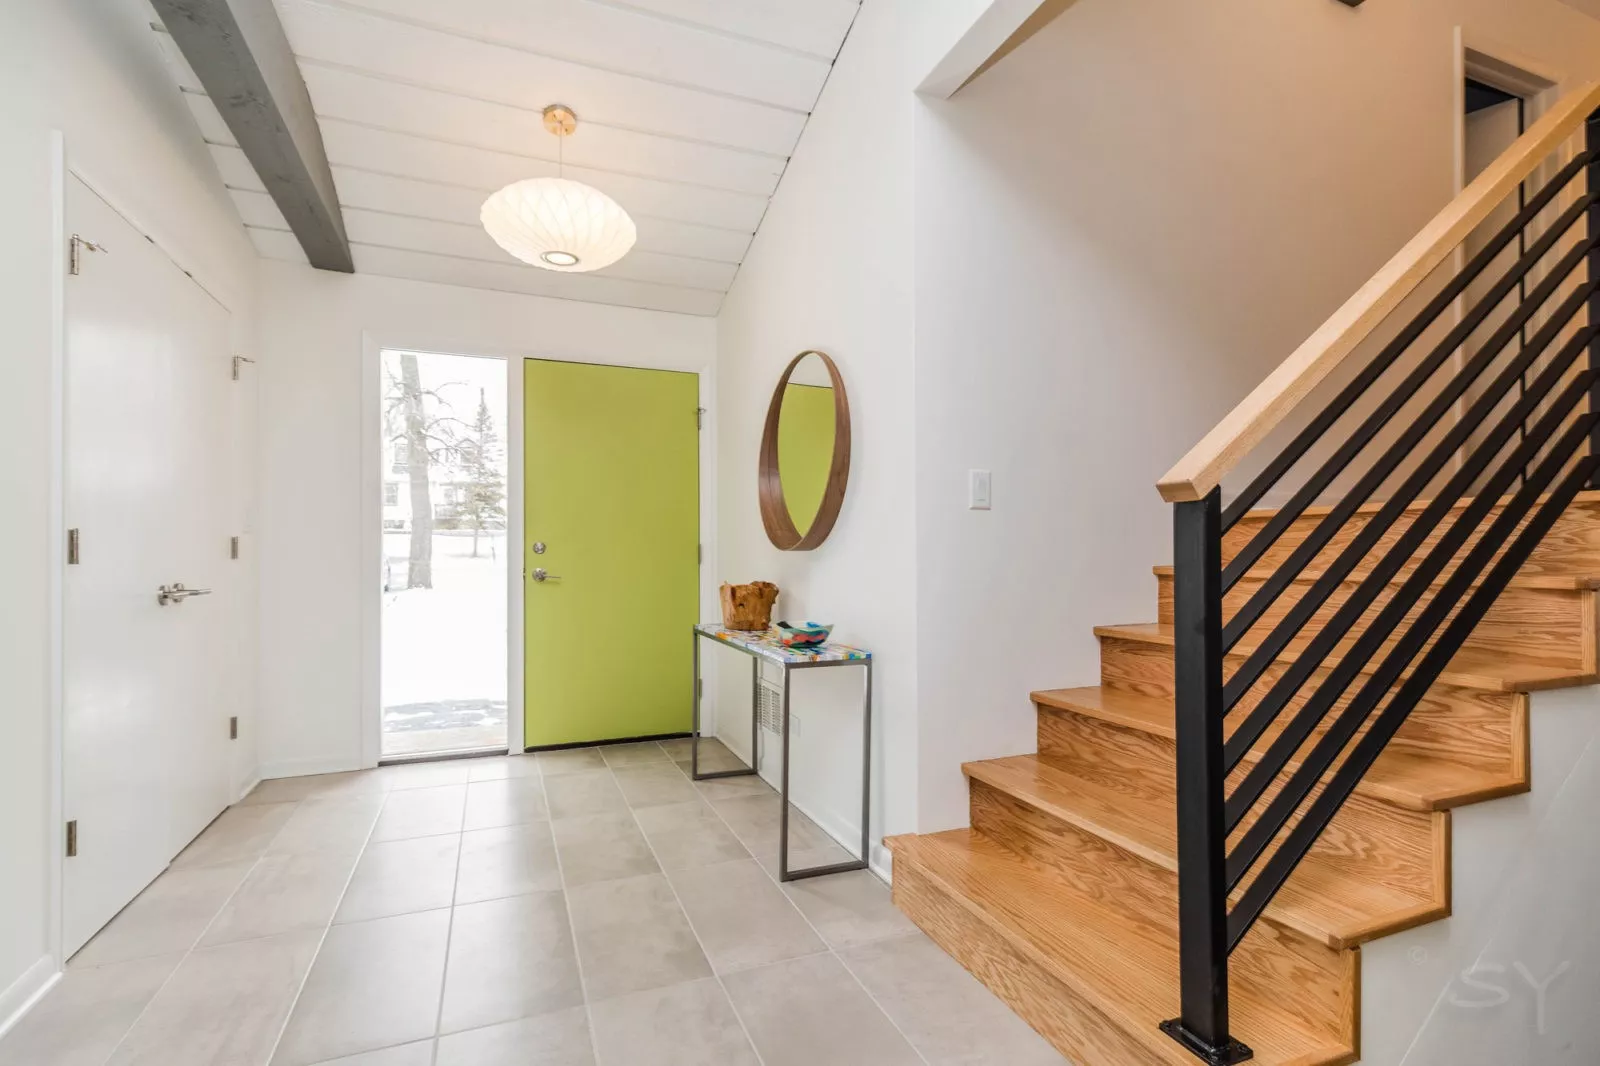 livco foyer remodel lime green door light tile flooring hardwood steps open railing wood beams